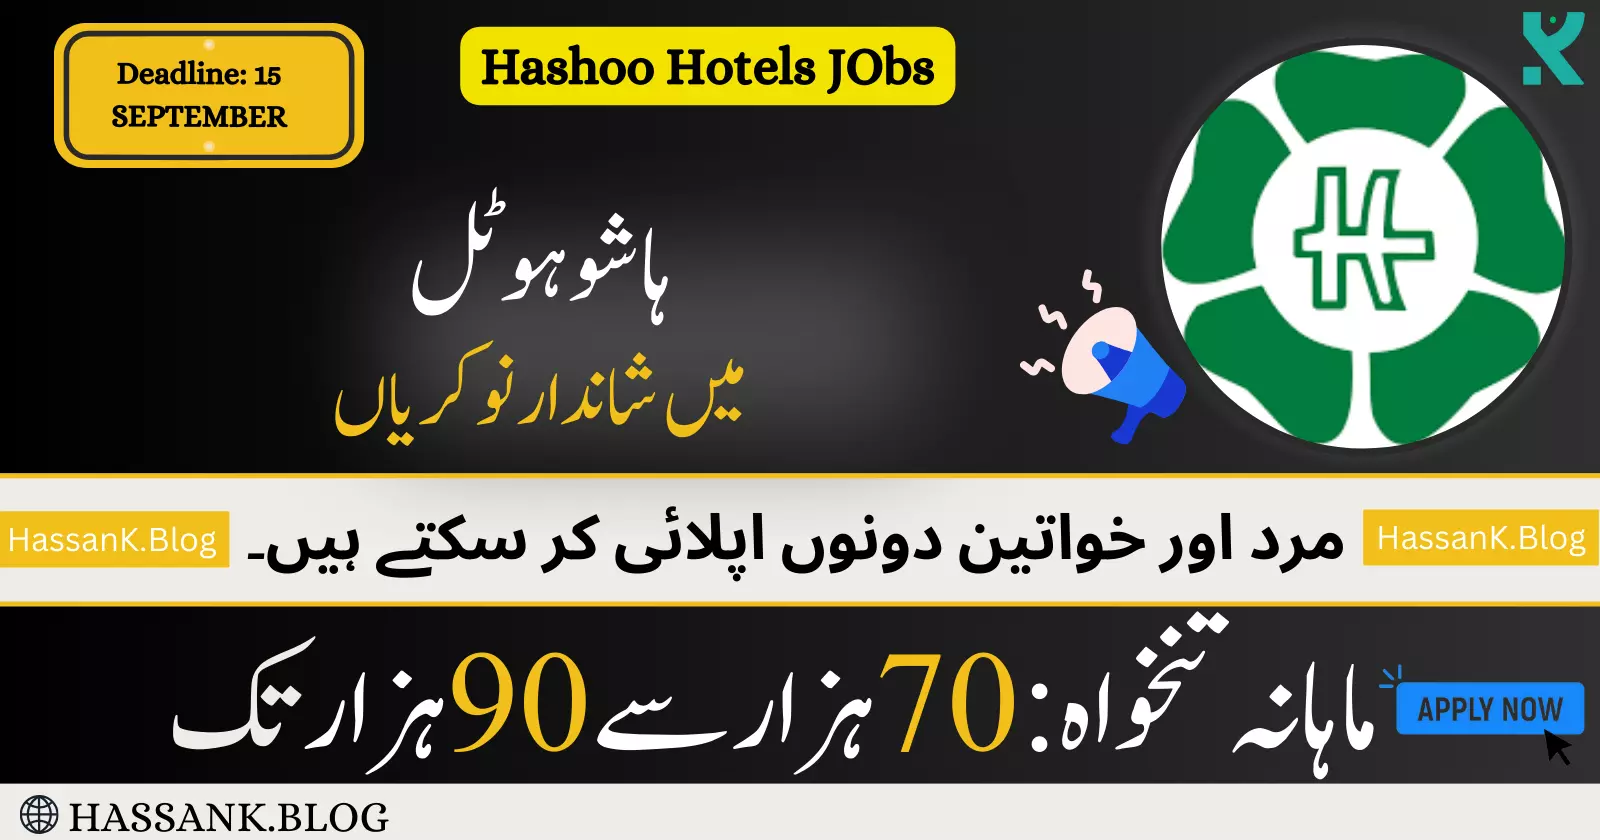 Hashoo Hotels Jobs Online Apply